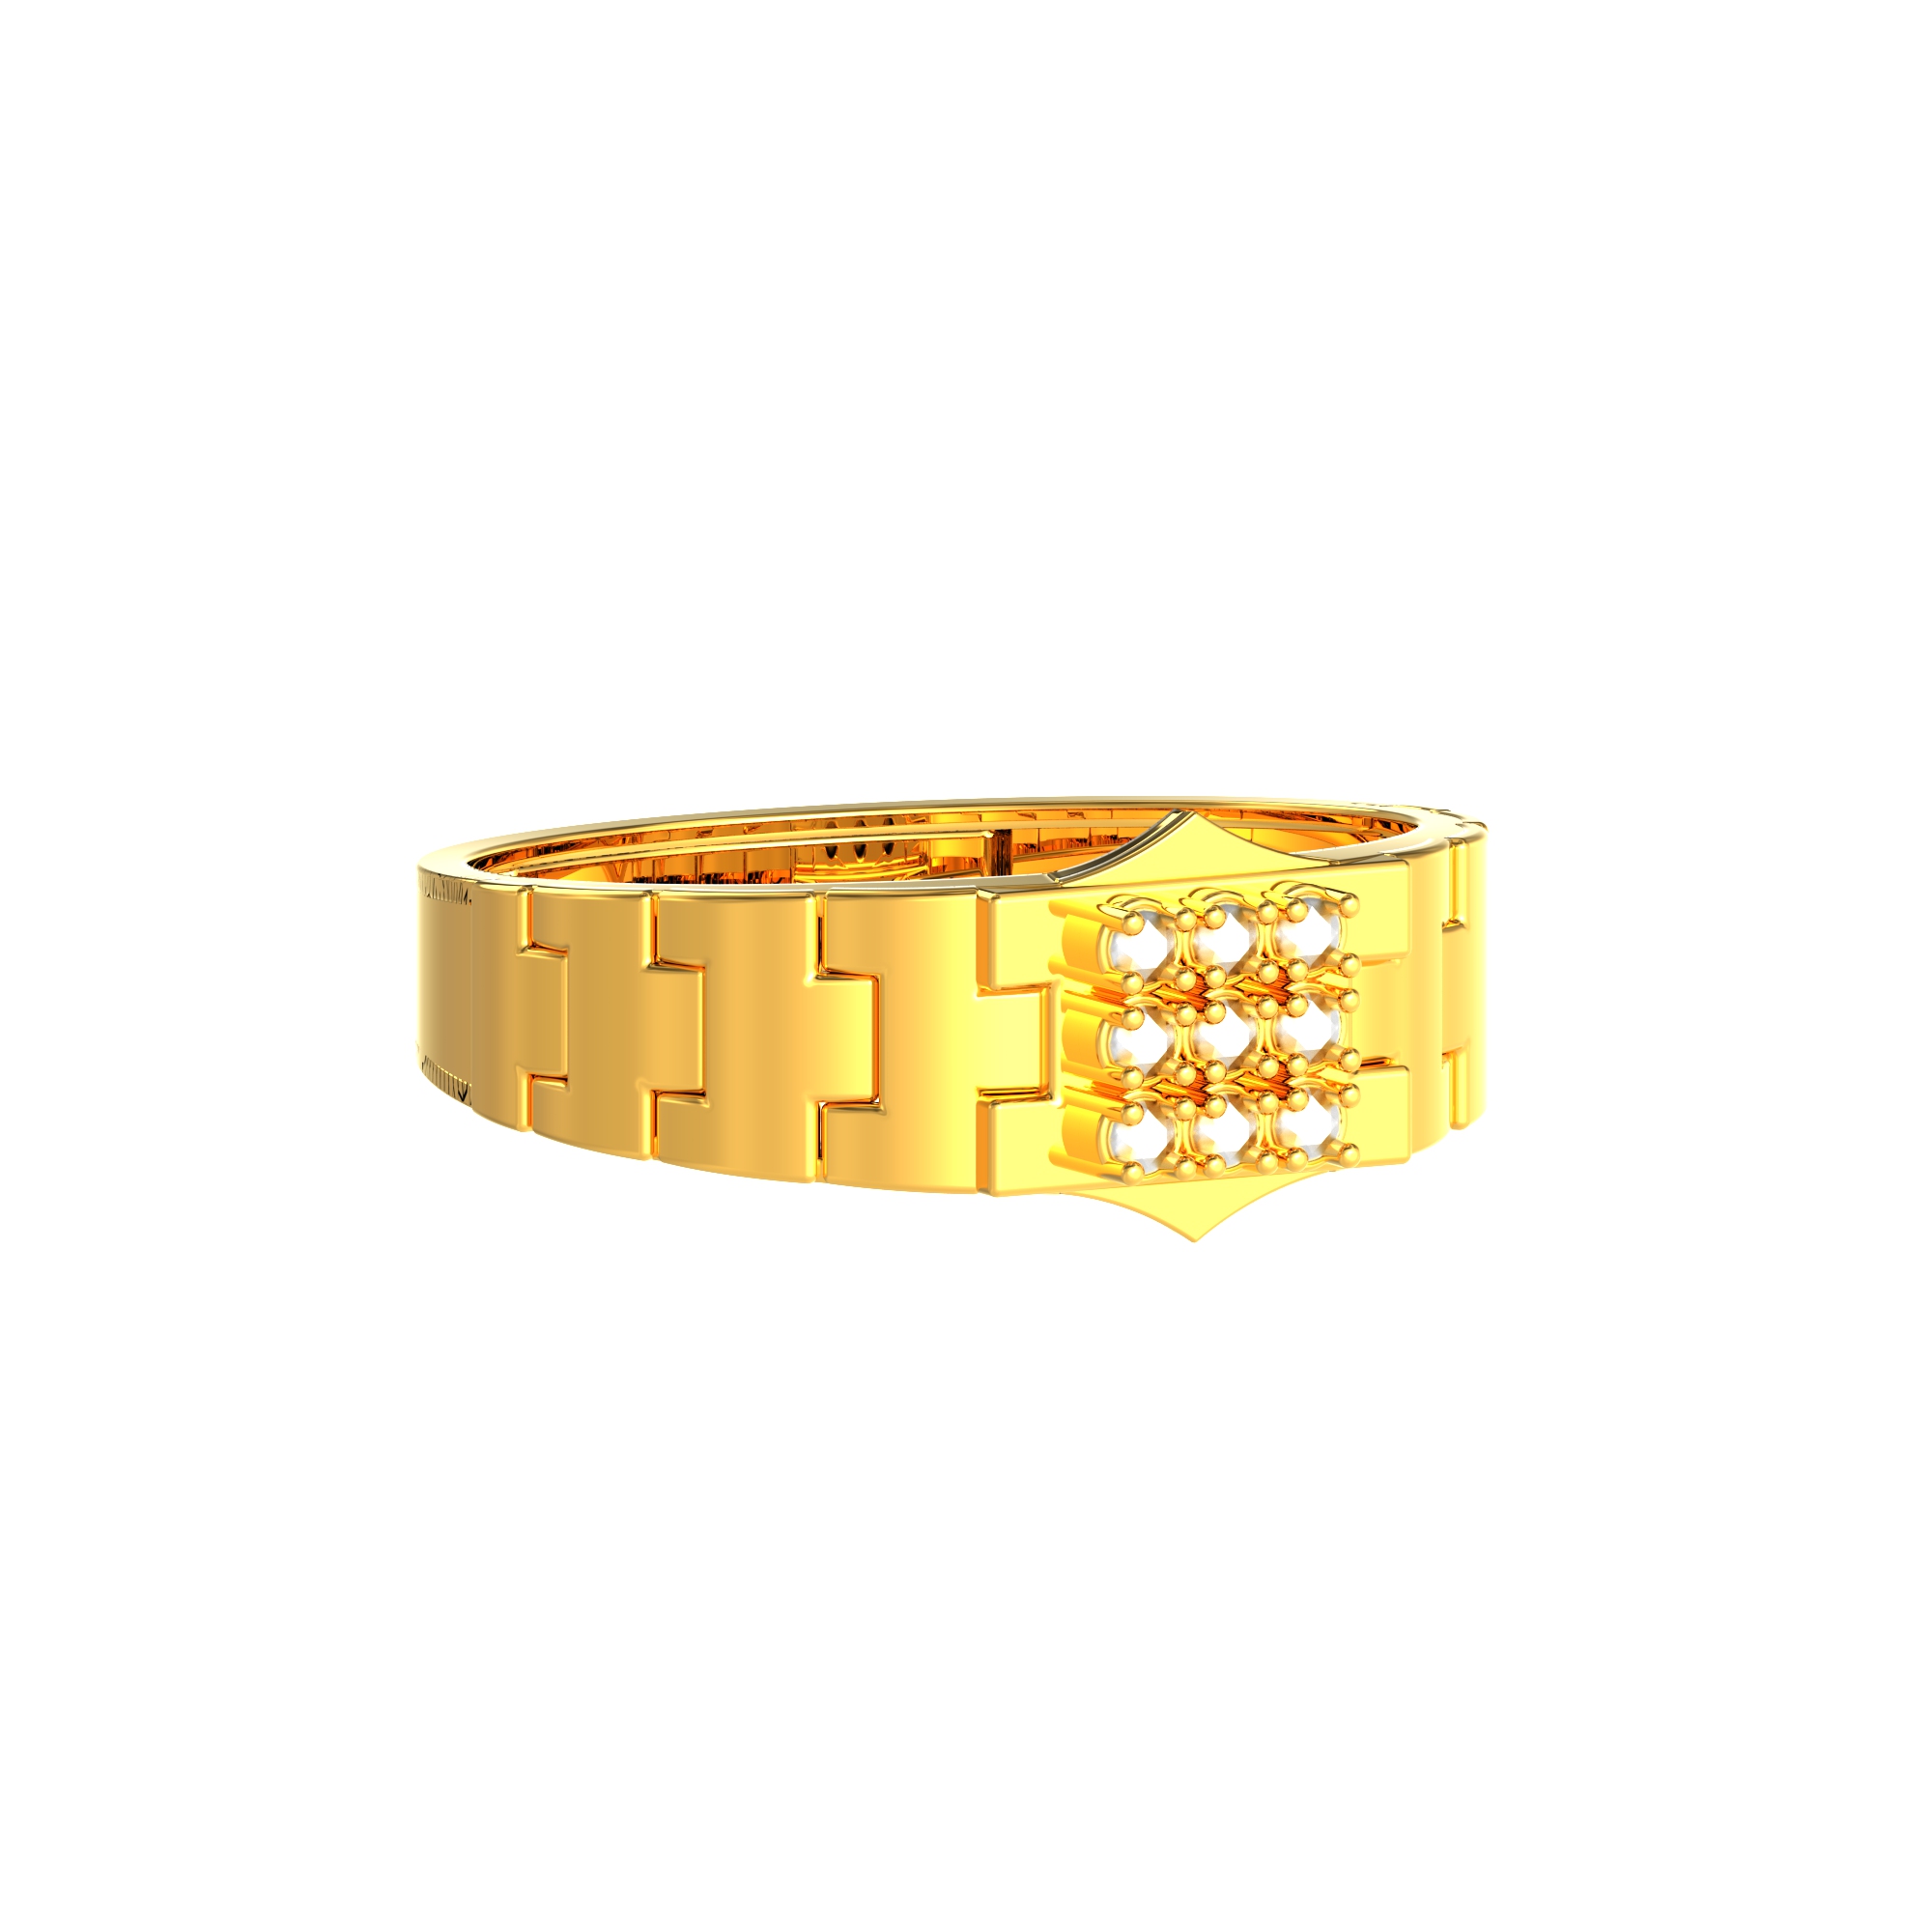 Geometric Square Grid Pattern Gold Ring